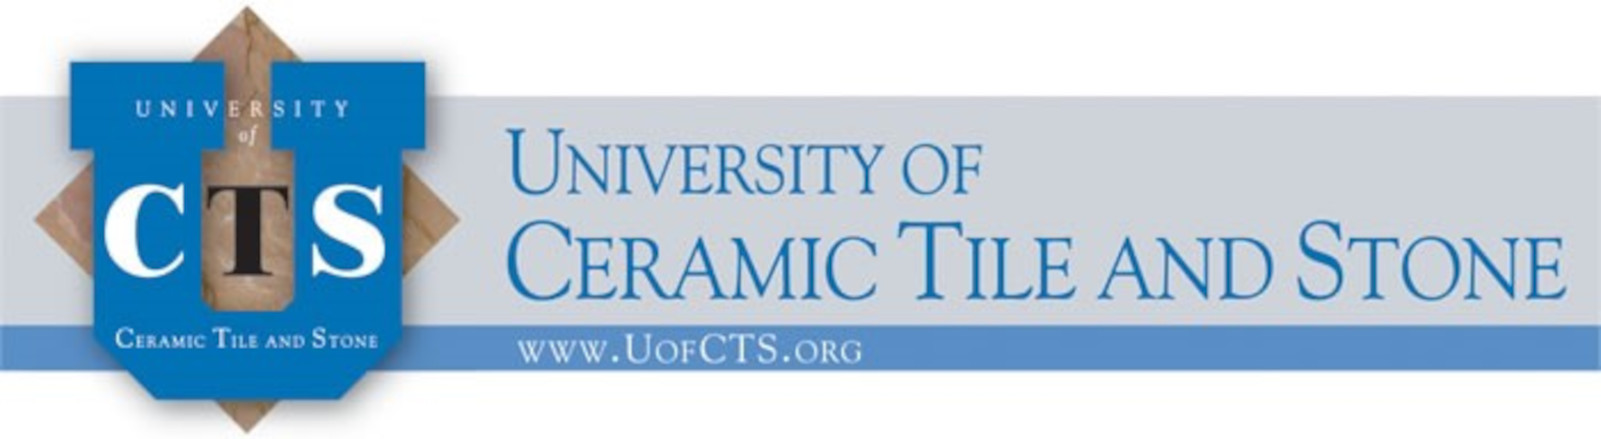 UofCTS logo